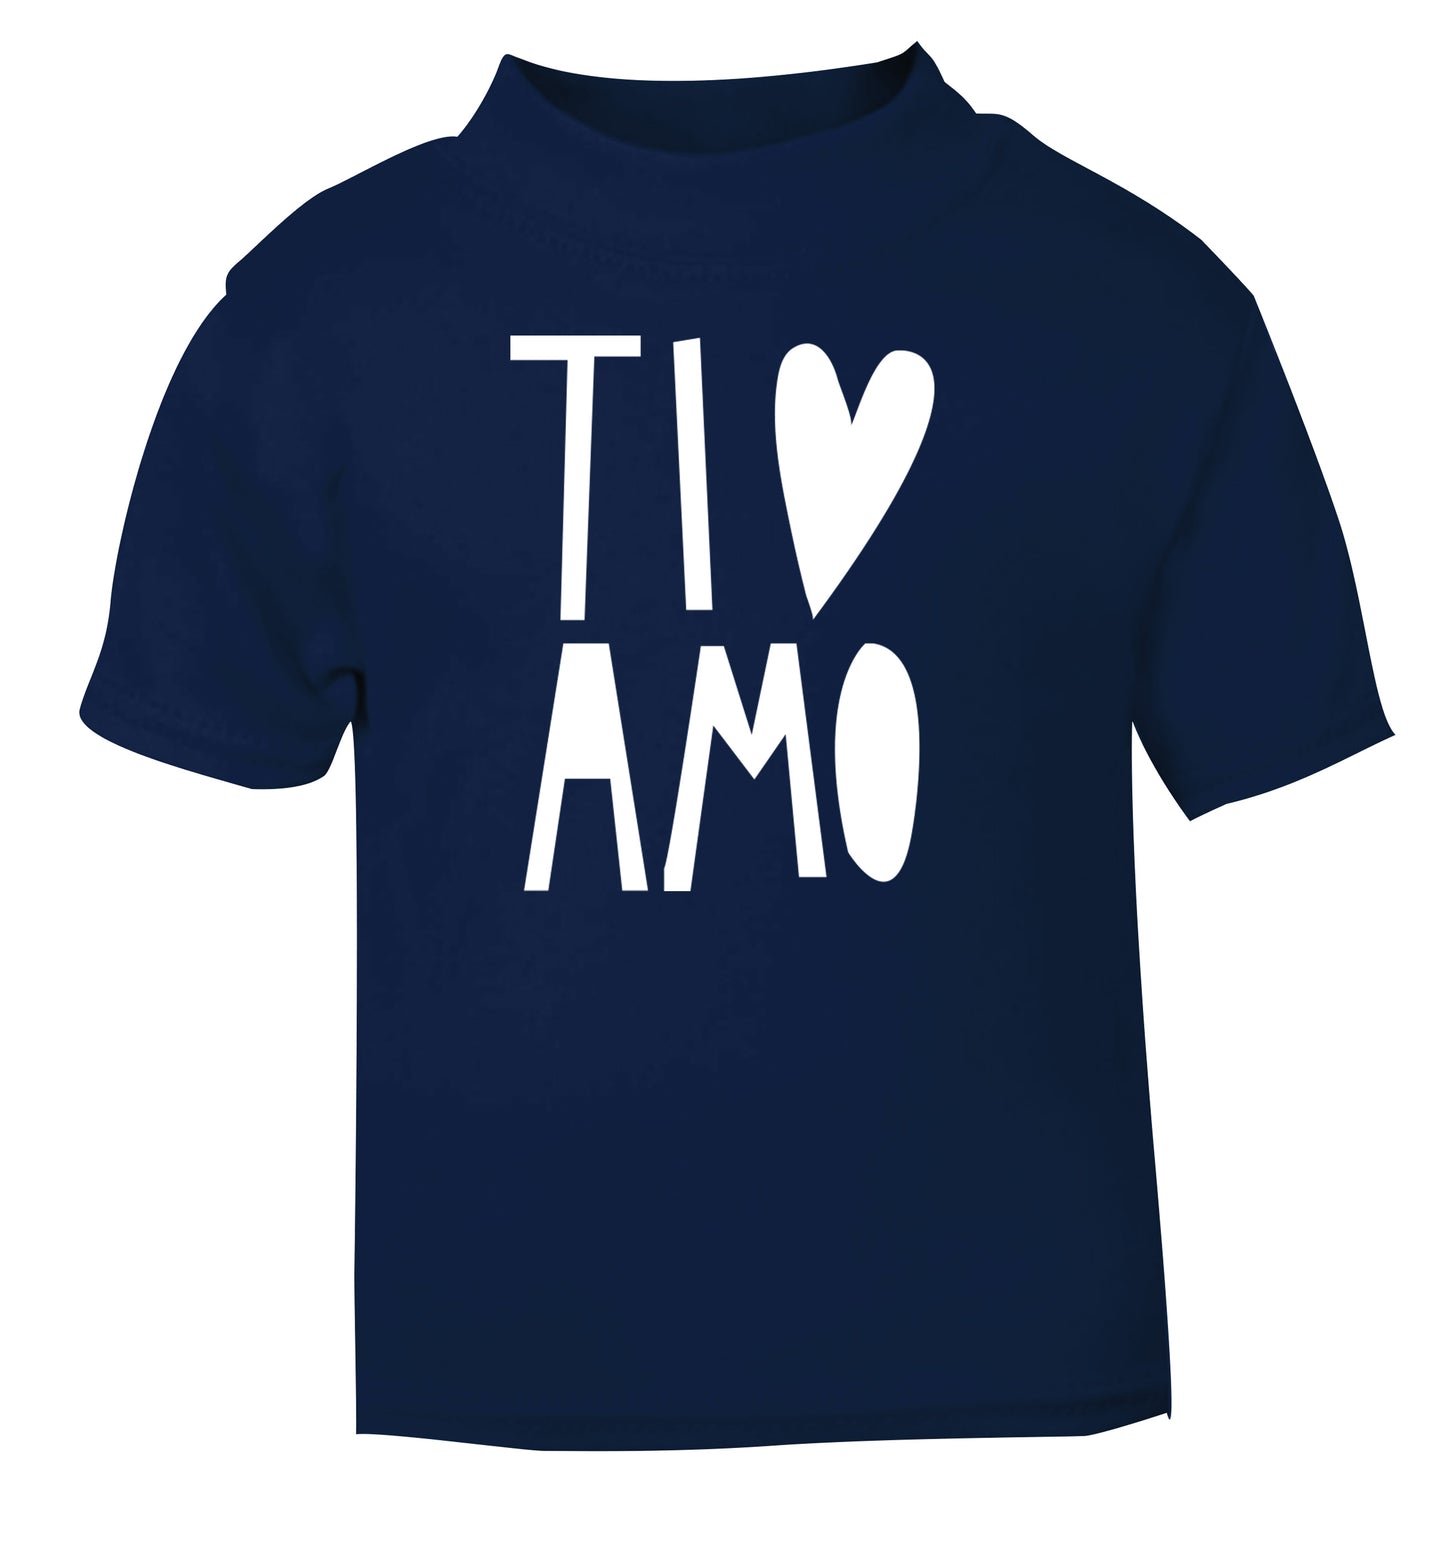 Ti amo - I love you navy Baby Toddler Tshirt 2 Years